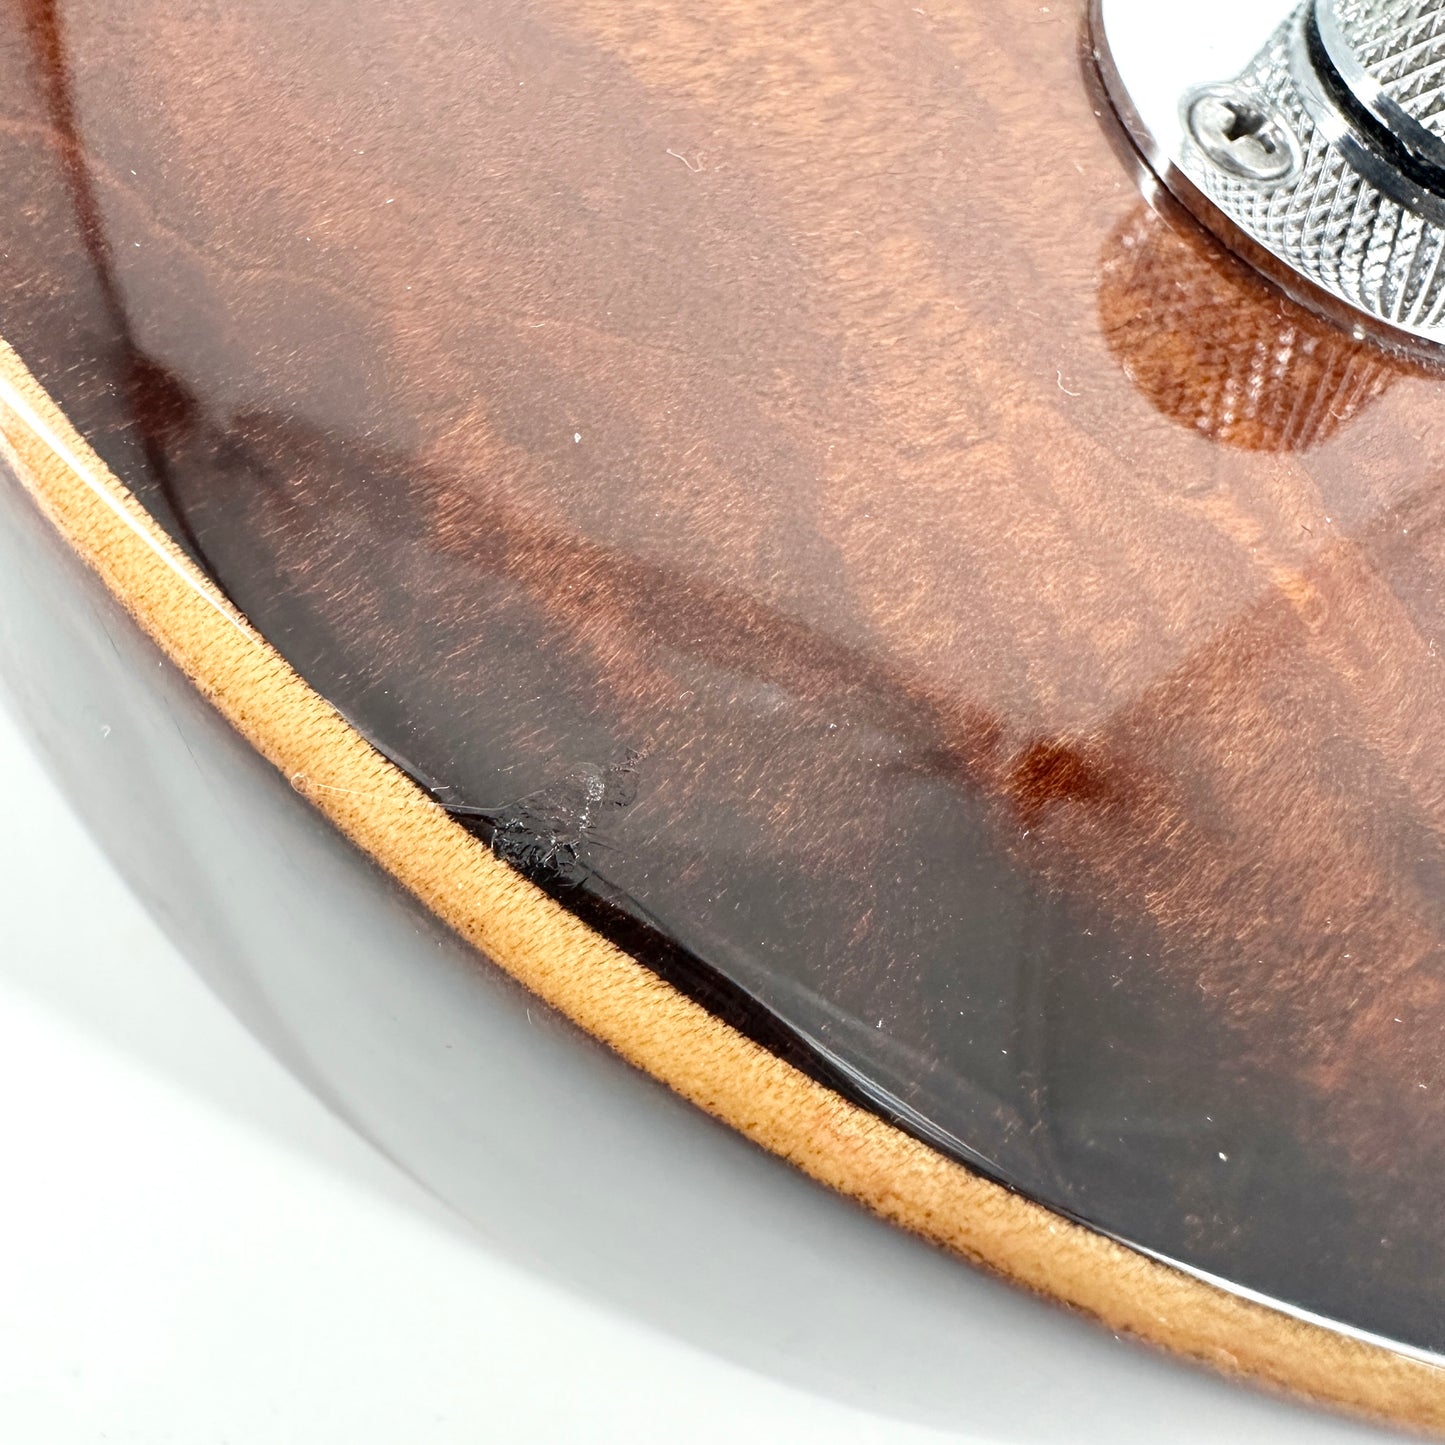 2012 Fender American Select Telecaster - Violin Burst